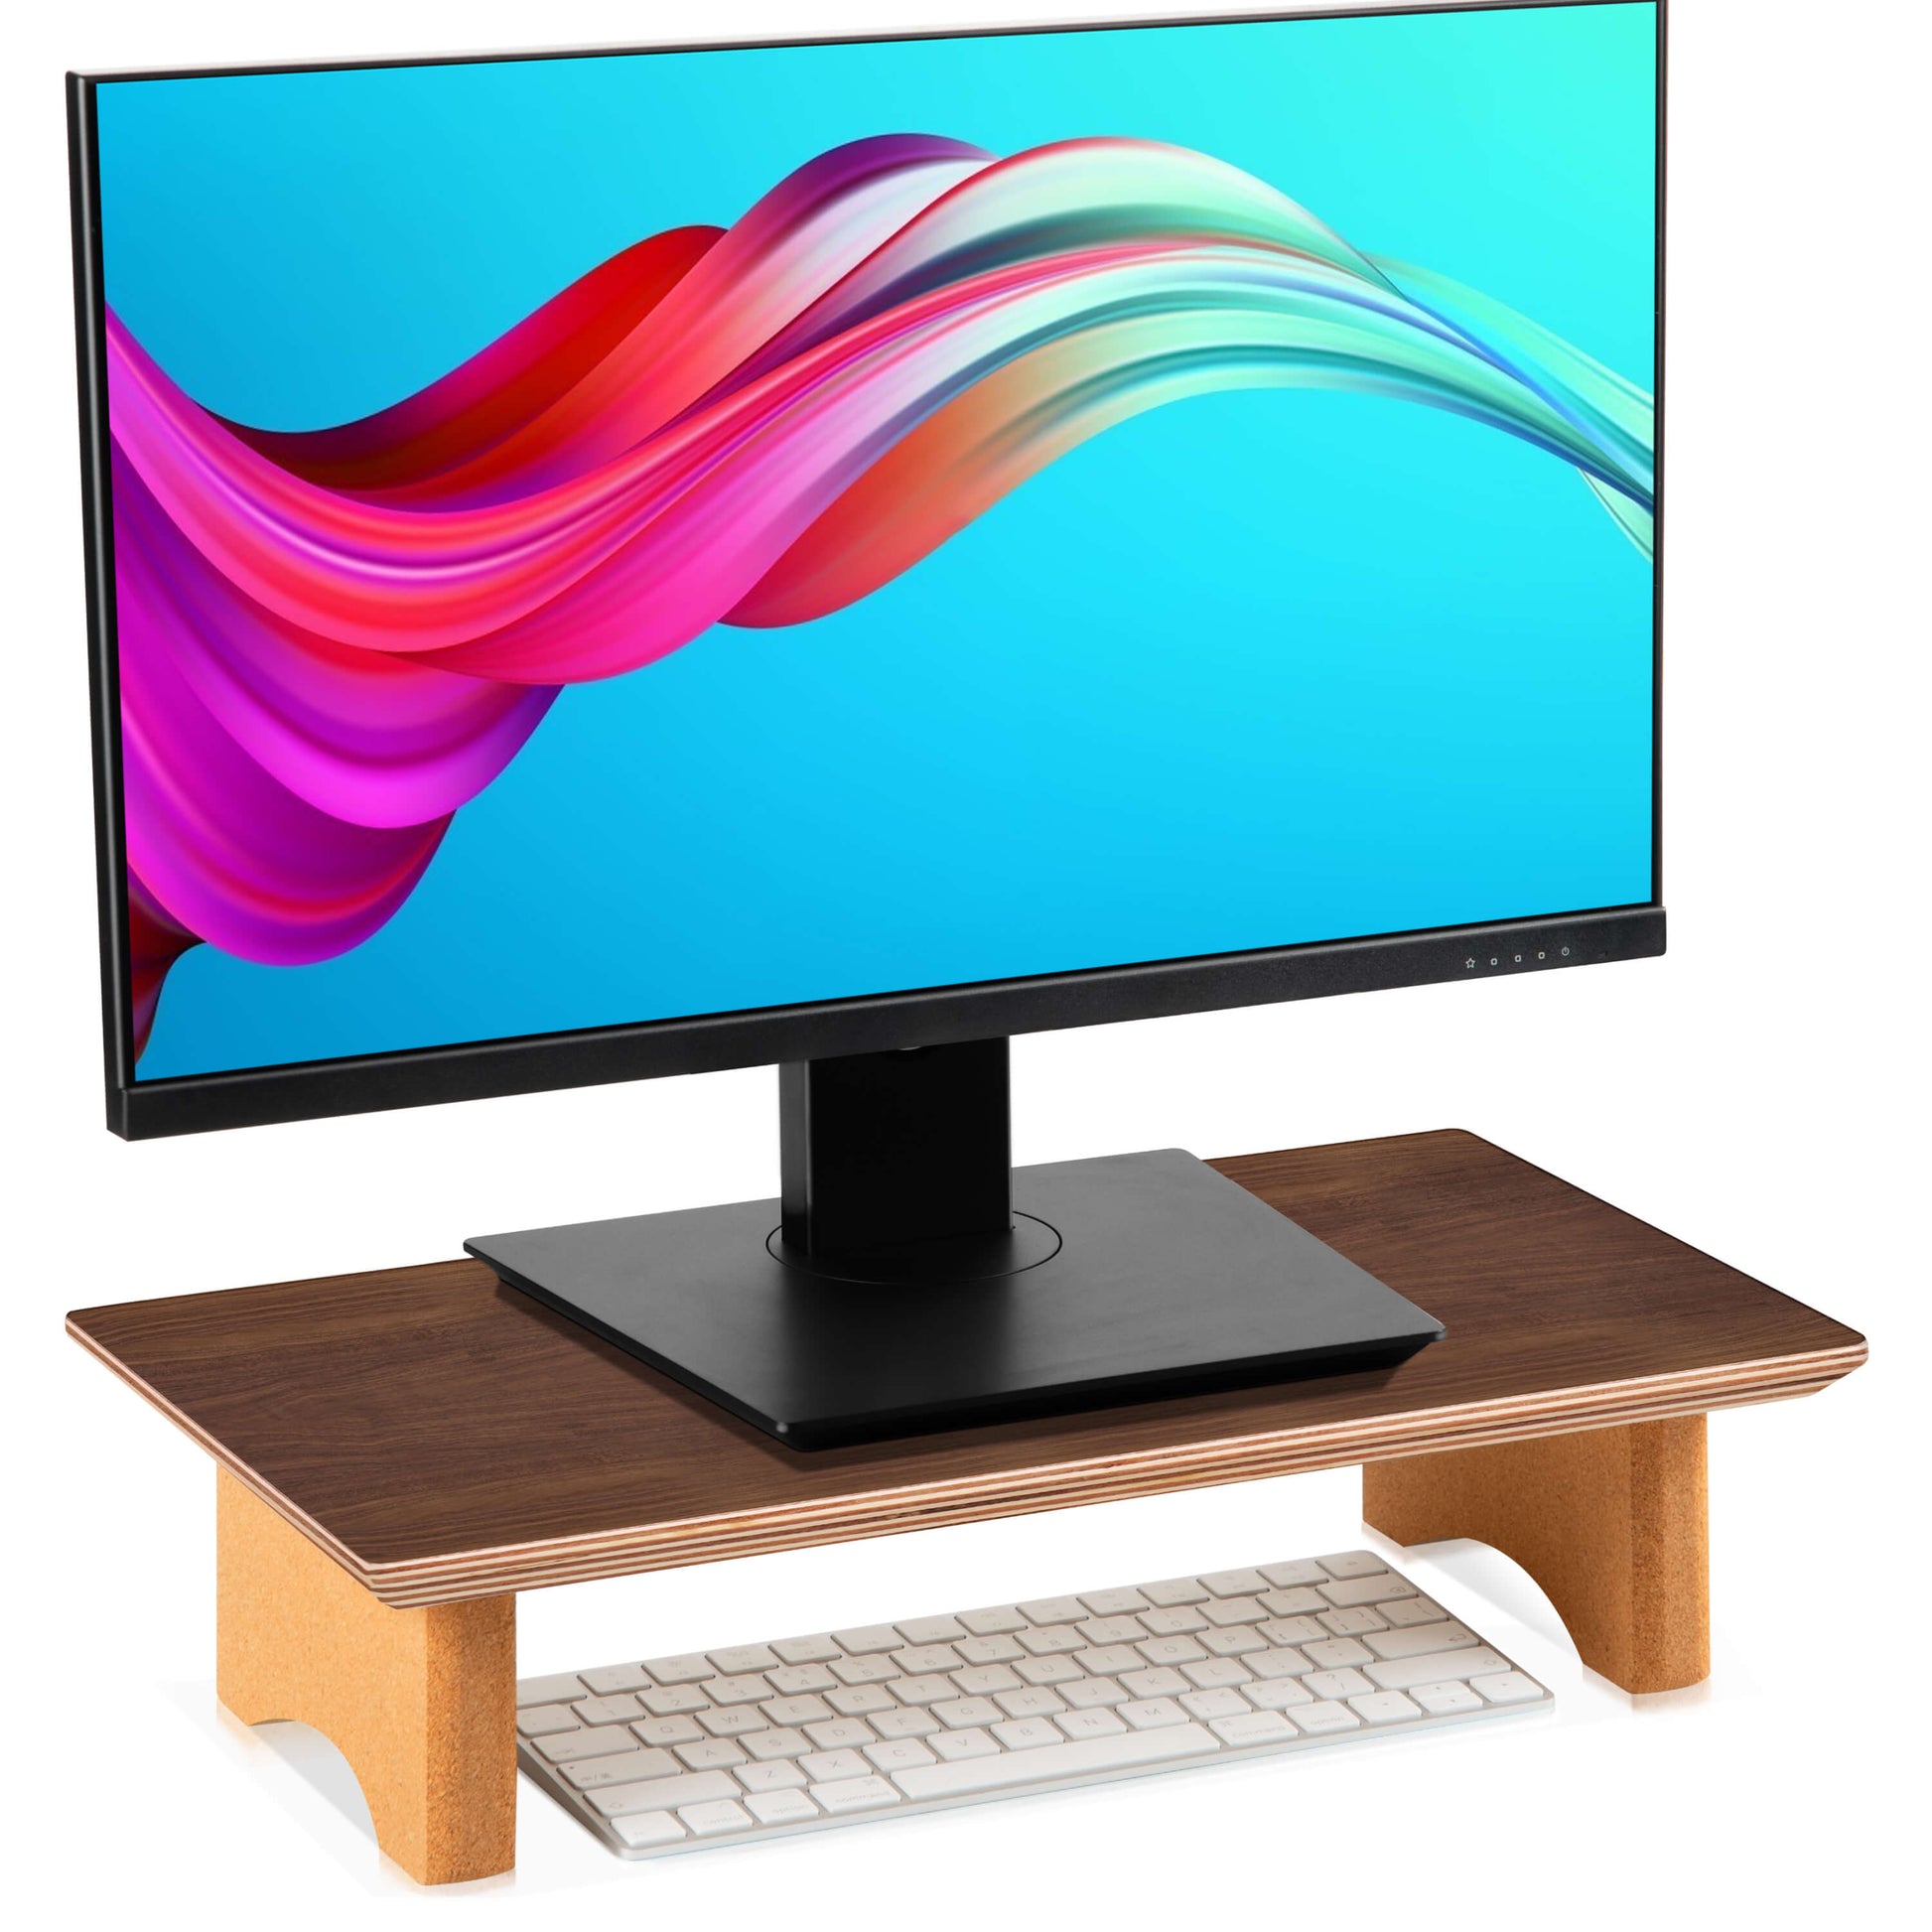 Aothia Wood Desktop Stands for Laptop